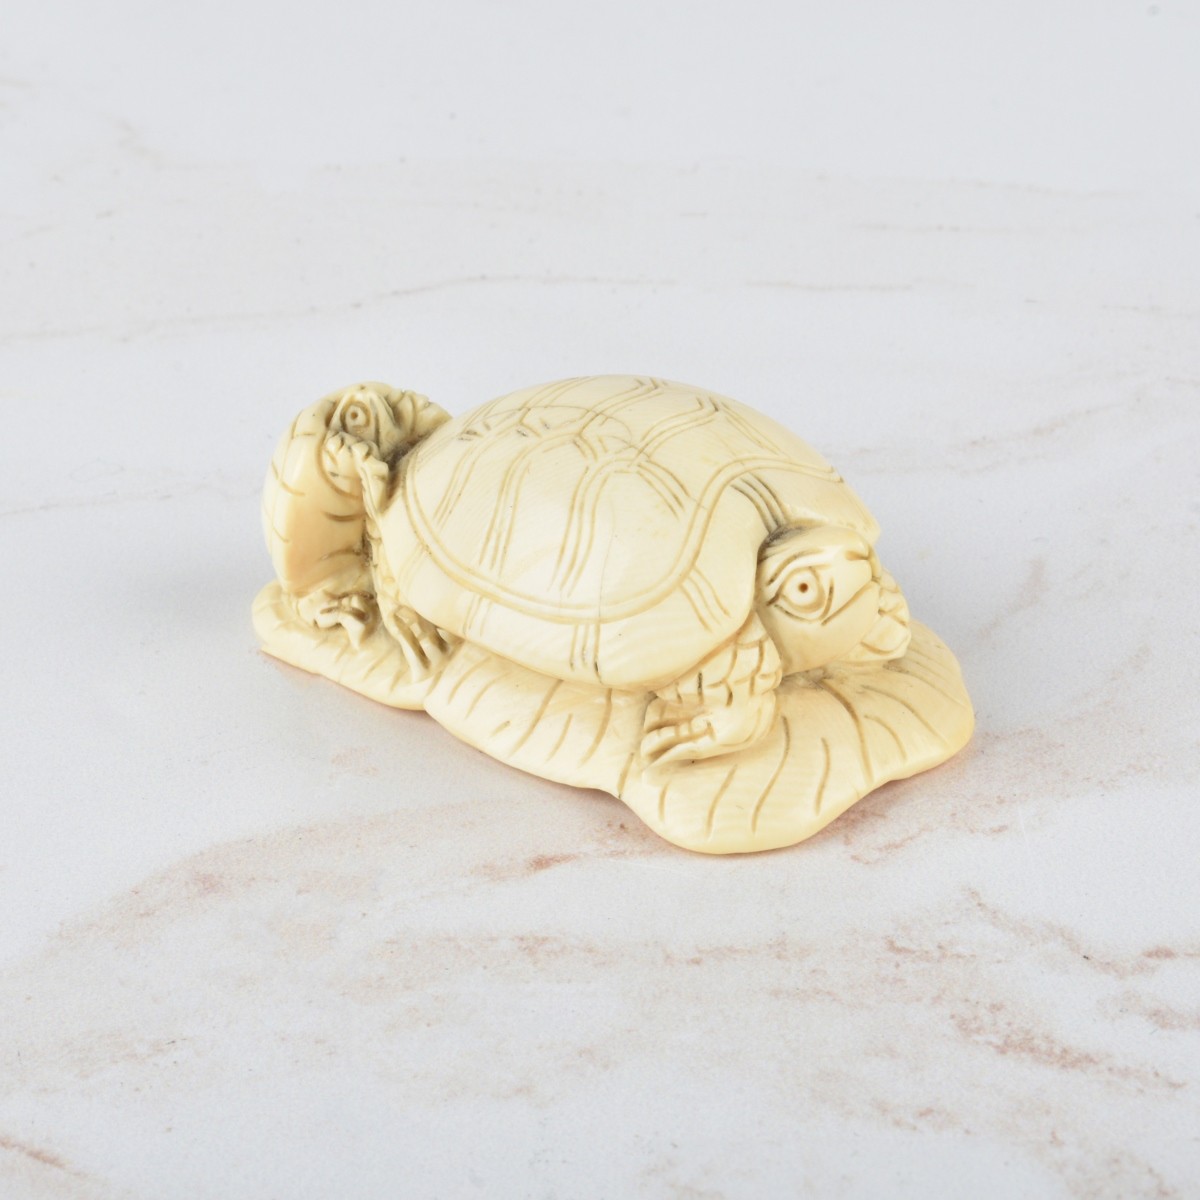 Carved Turtle Netsuke